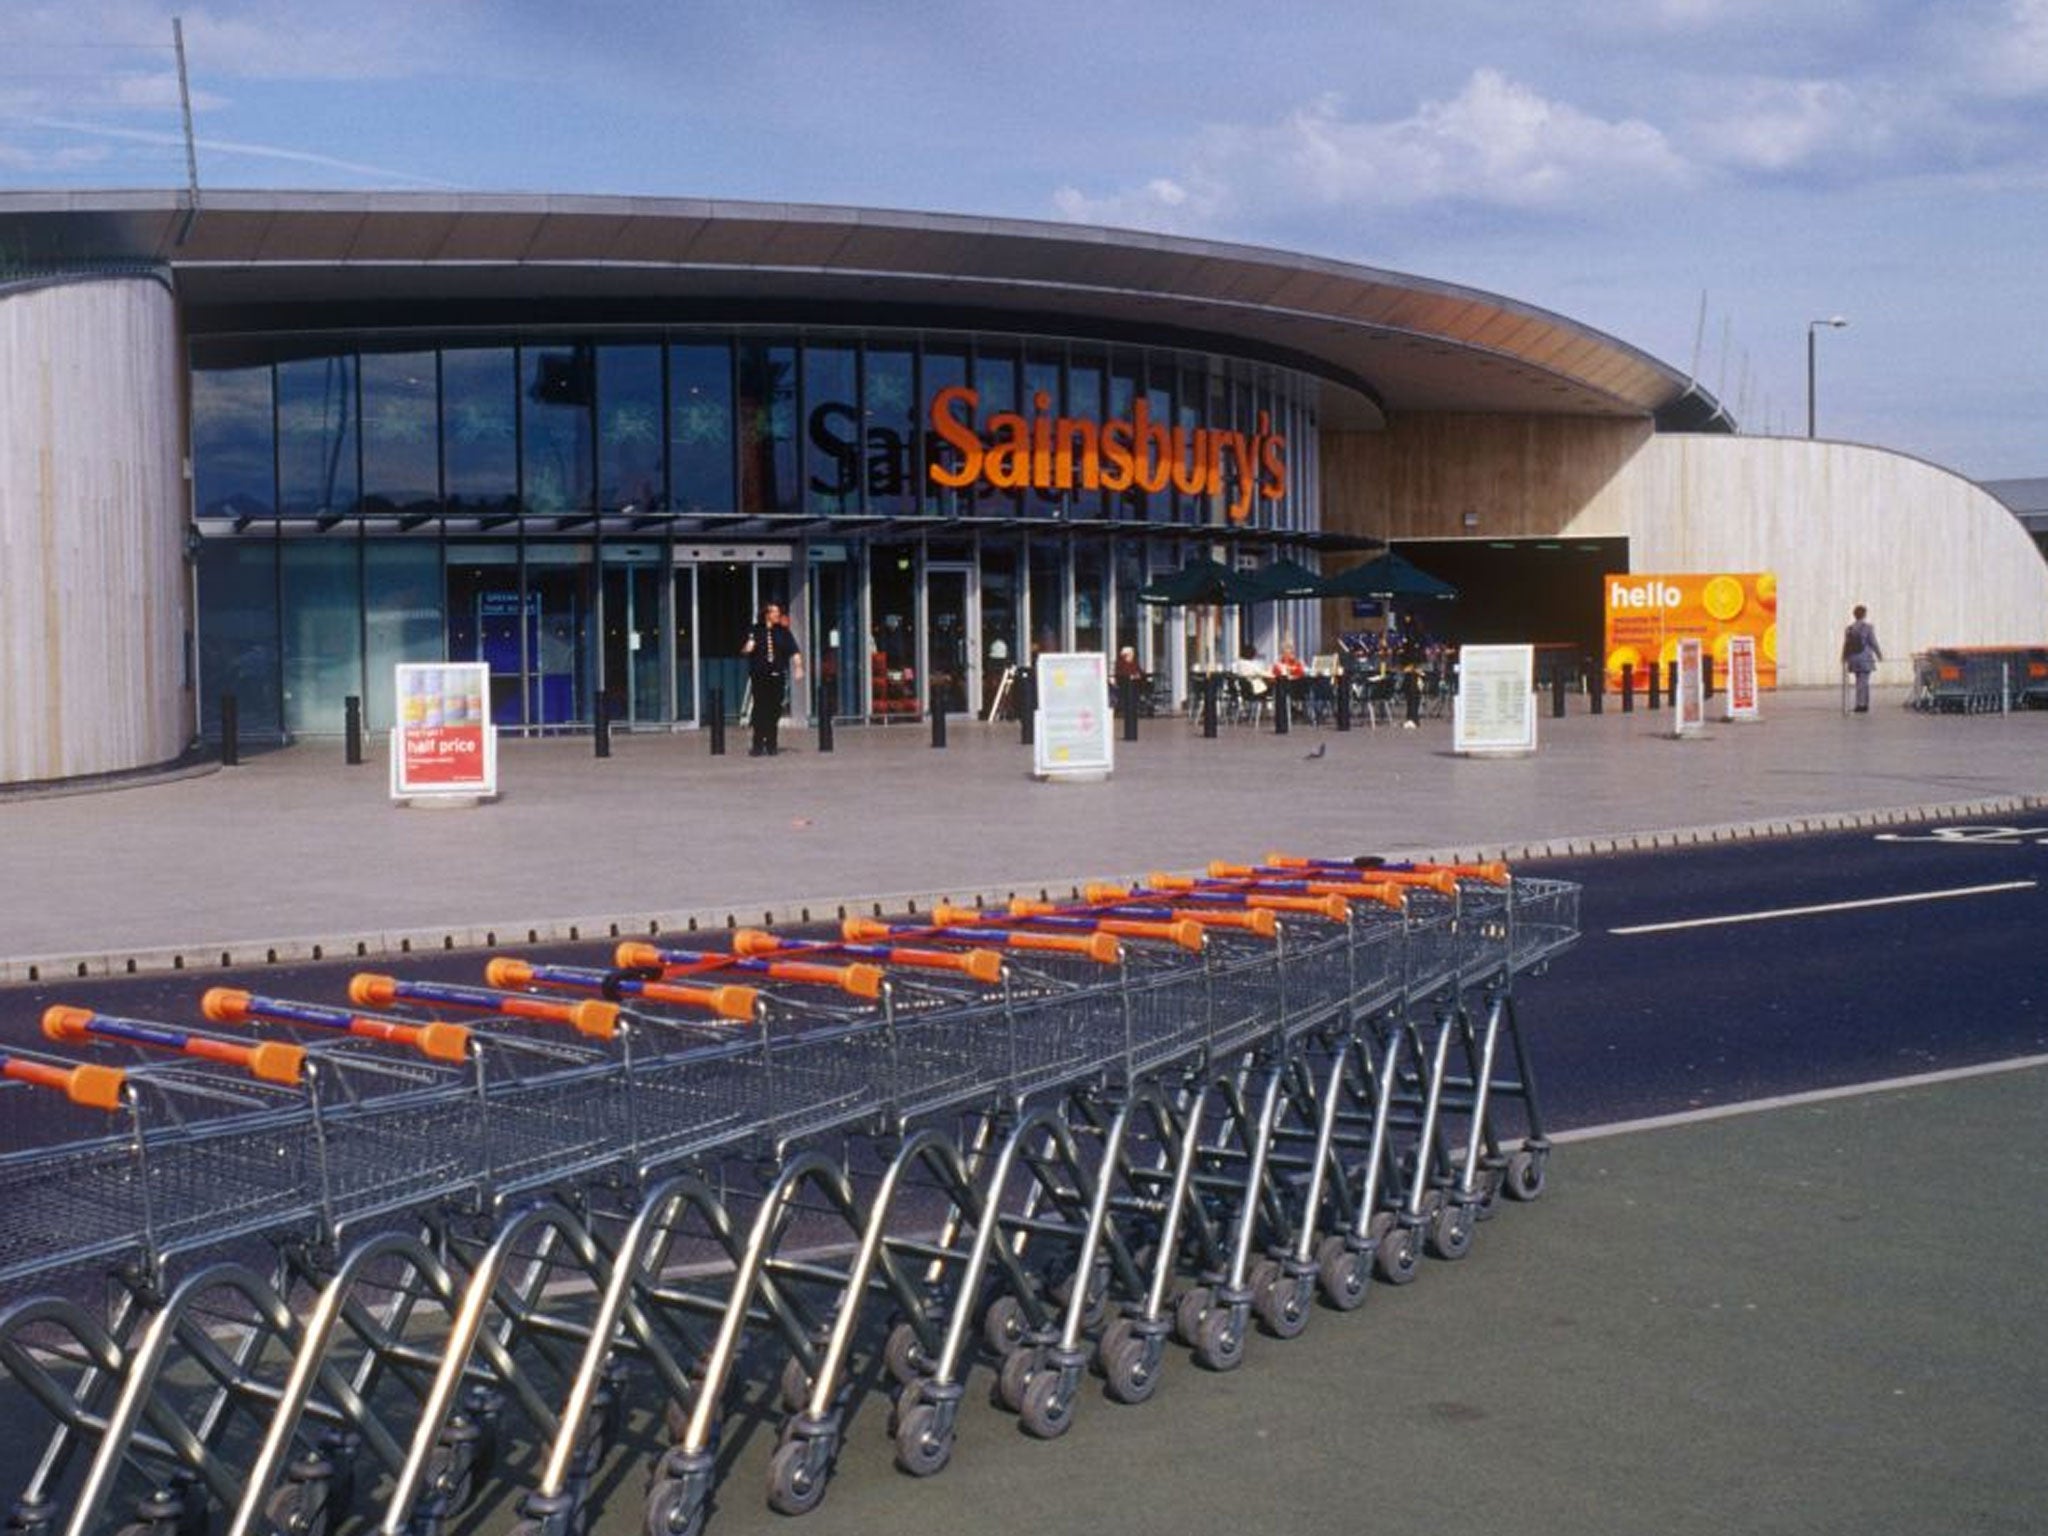 Greenwich Peninsular South East London UK Sainsbury's supermarket opened 2000 architect Nicholas Grimshaw ecological design